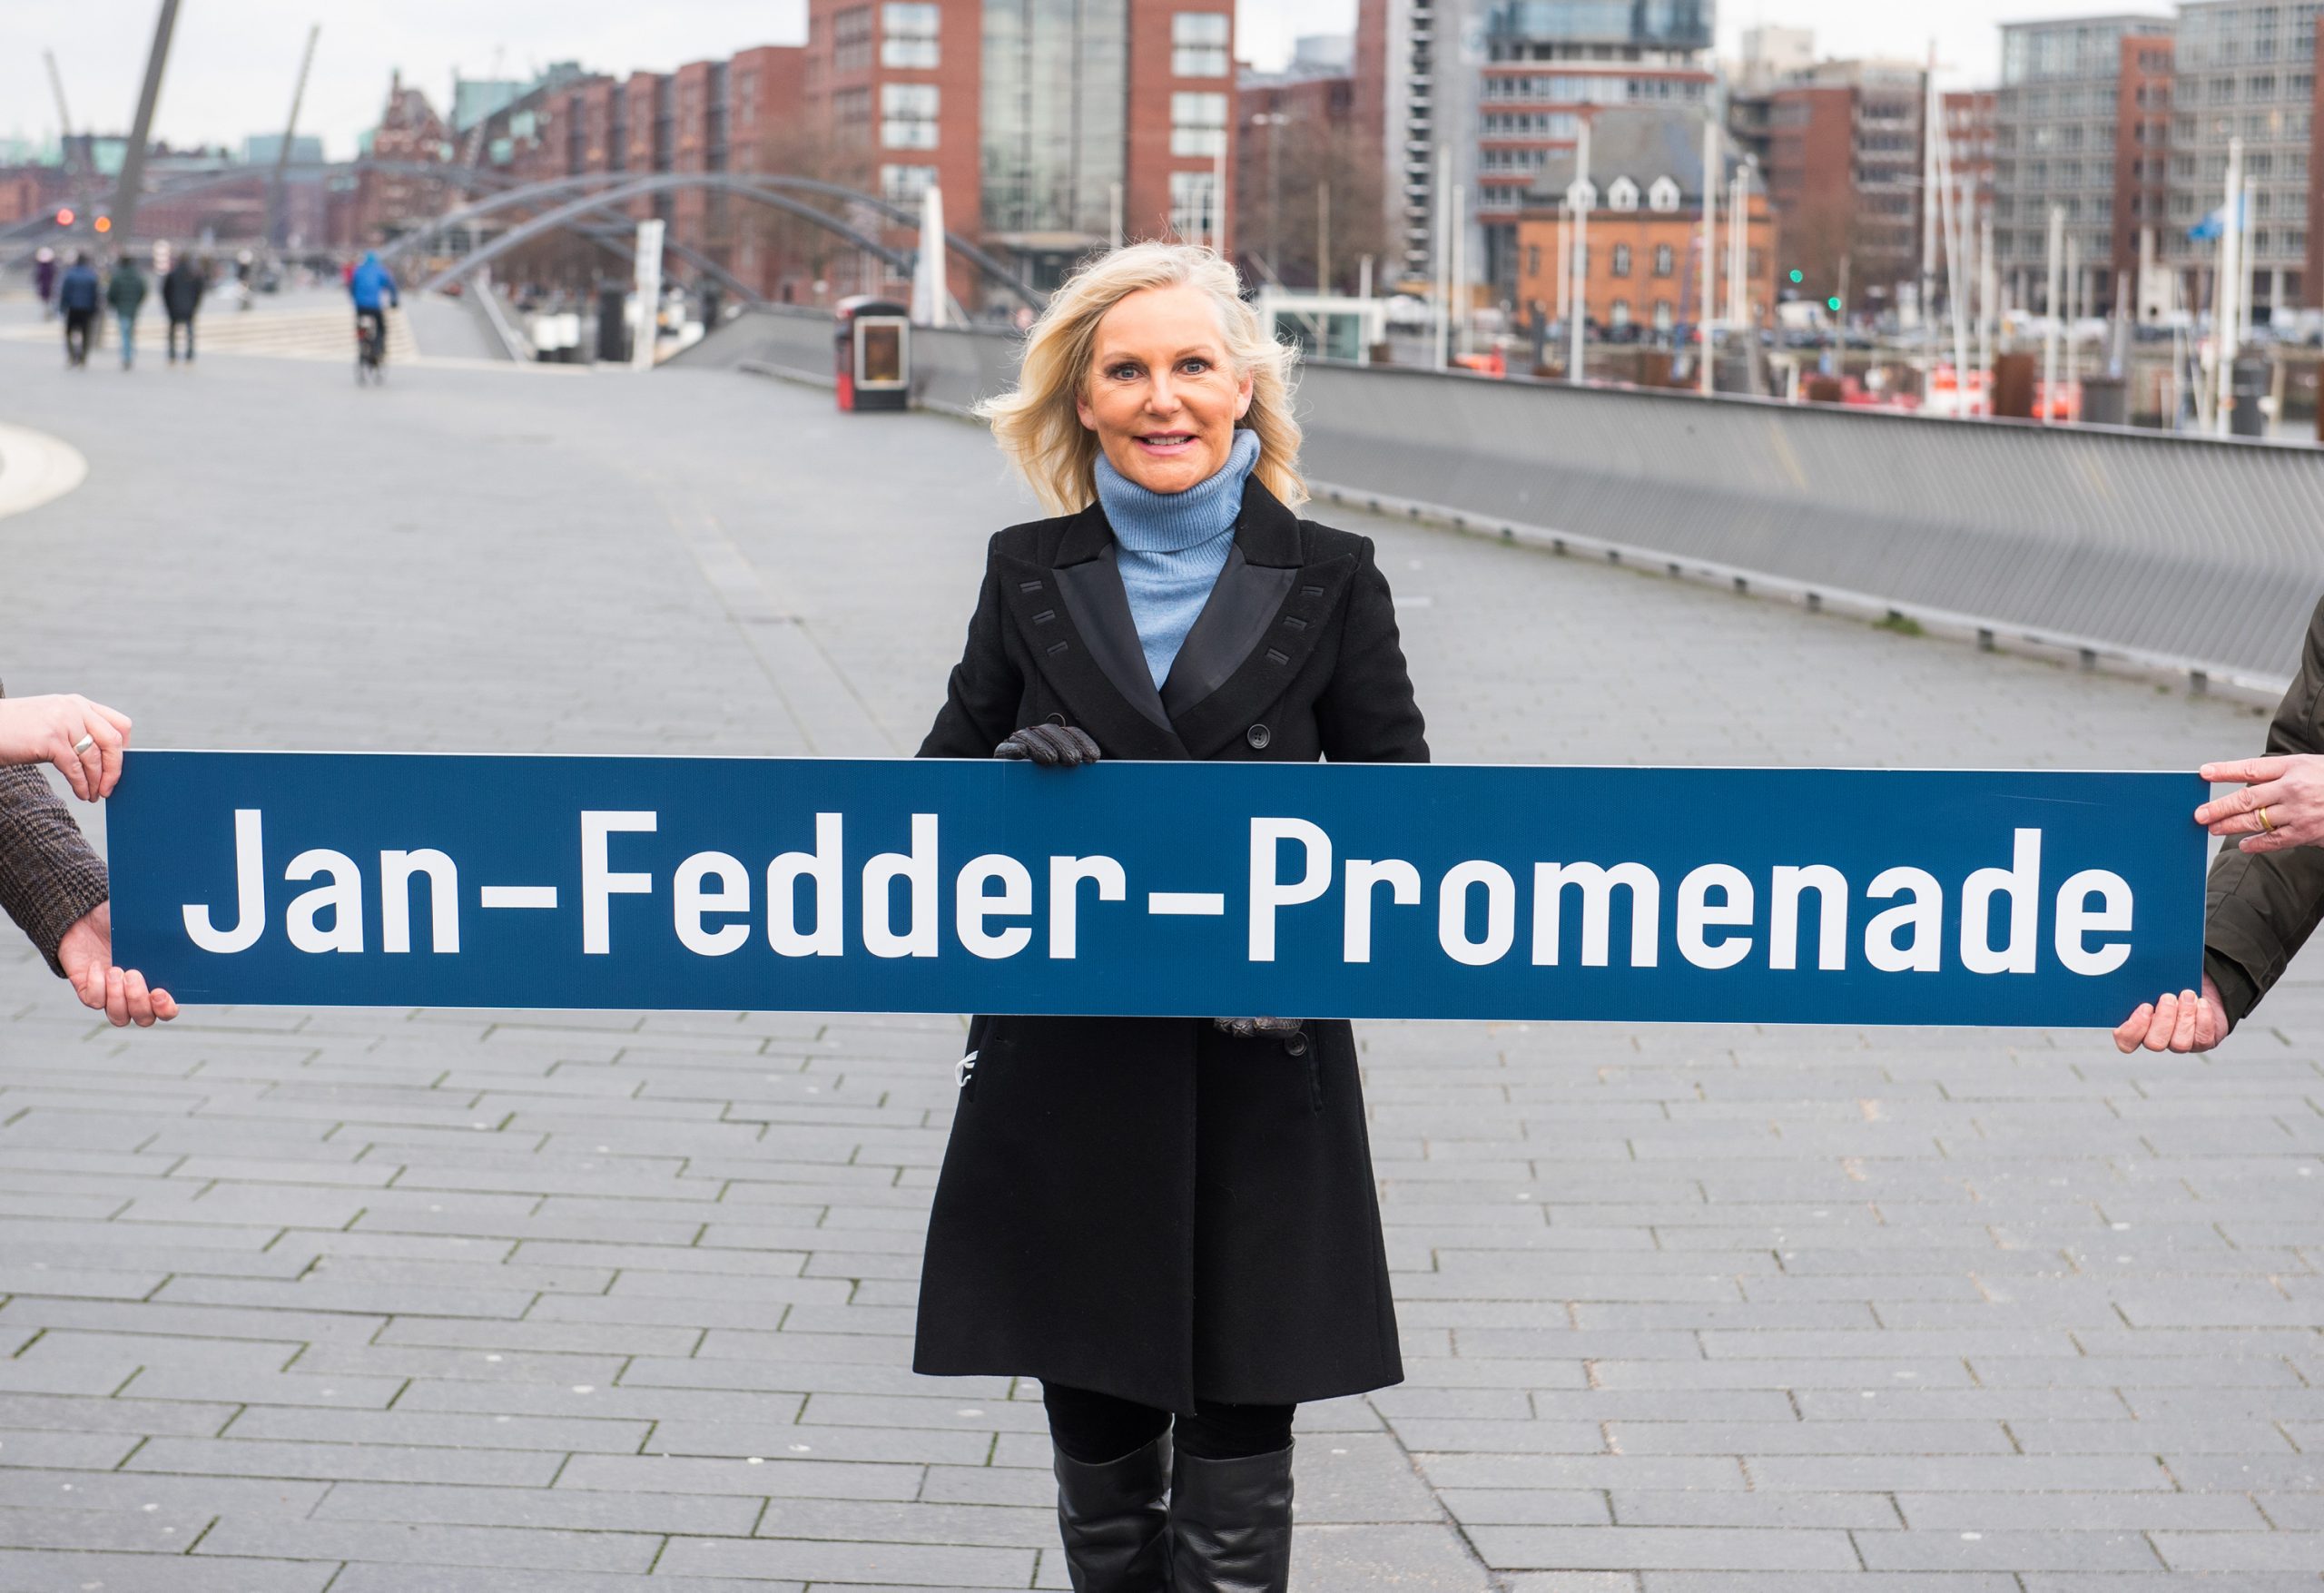 Jan-Fedder-Promenade